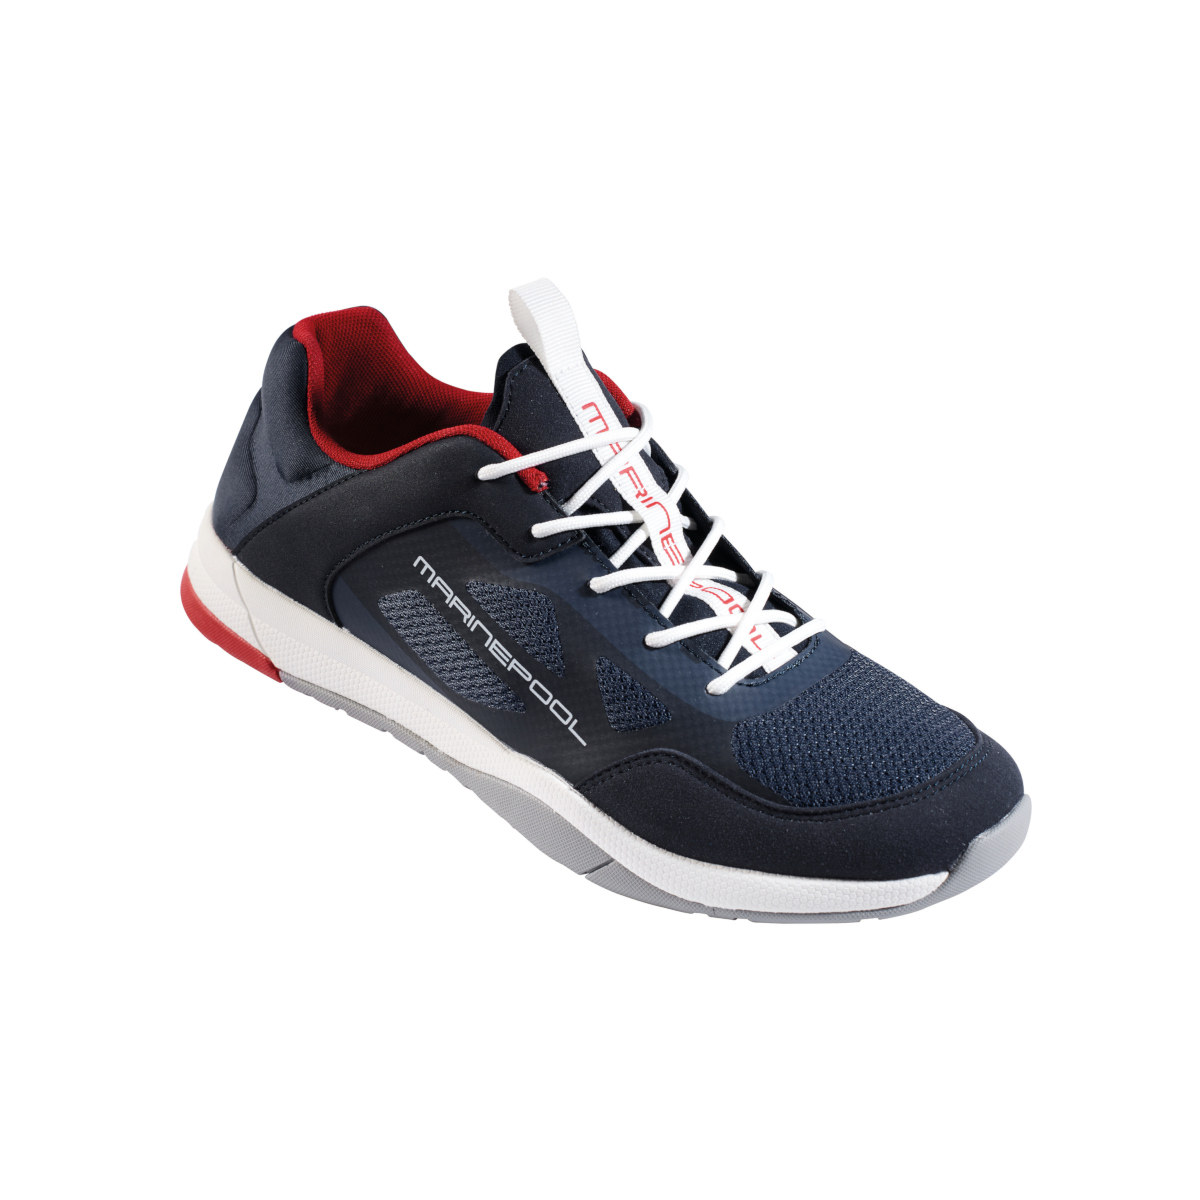 Marinepool Ocean Spirit chaussure de pont, homme - bleu marine/rouge, pointure 41